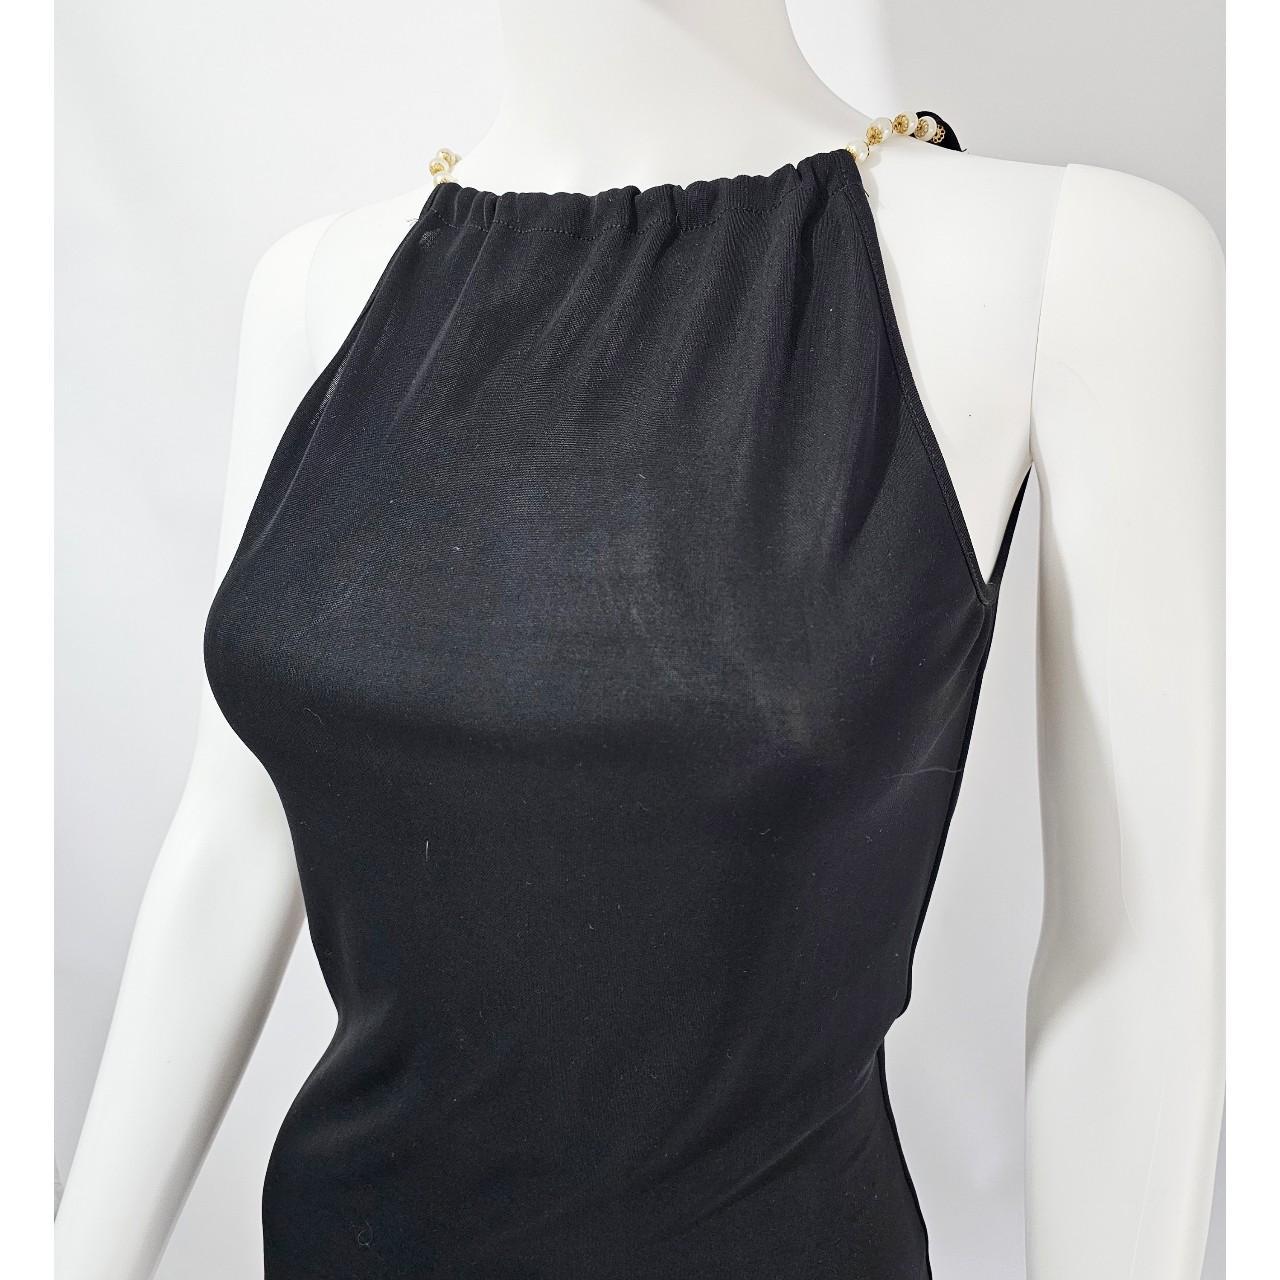 Dolce & Gabbana Women's Black and Silver Dress - 2